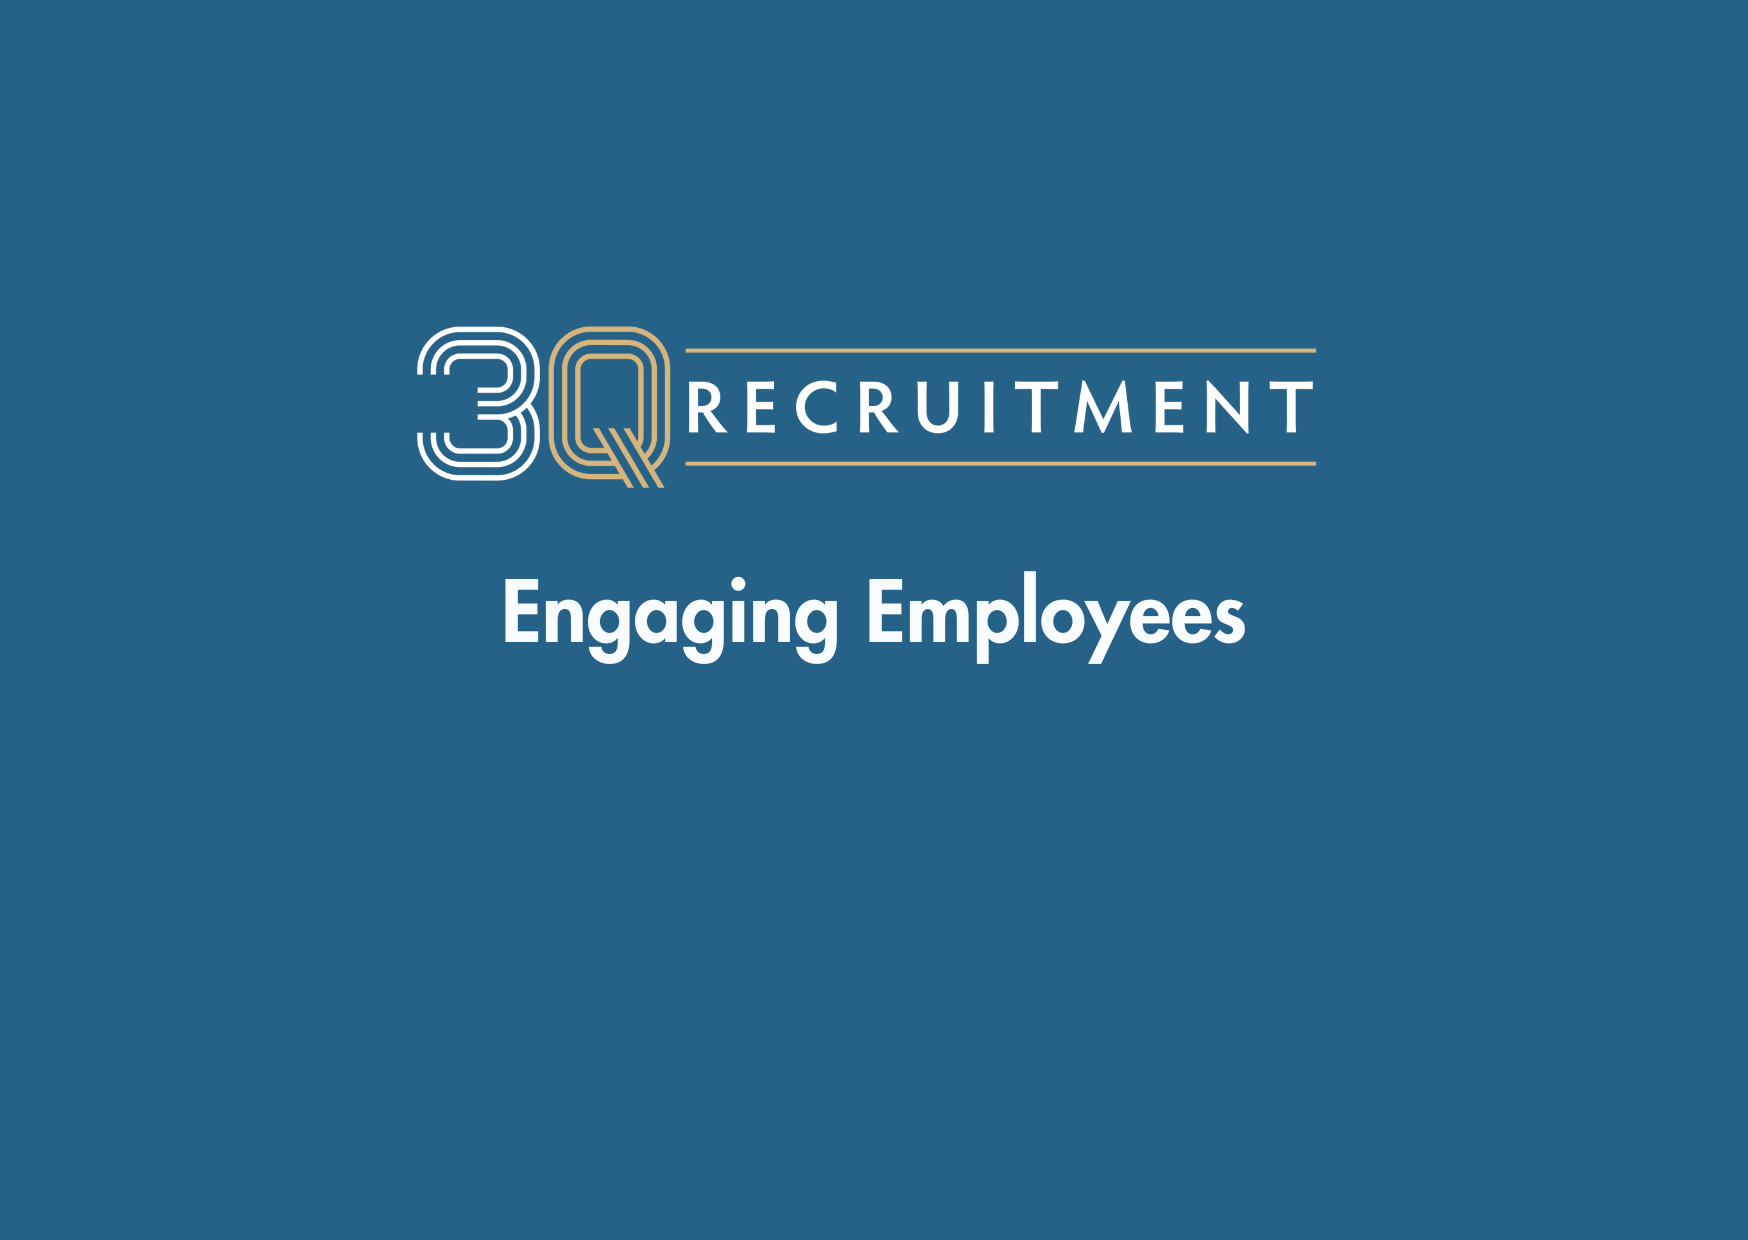 3Q Recruitment Engaging Employees